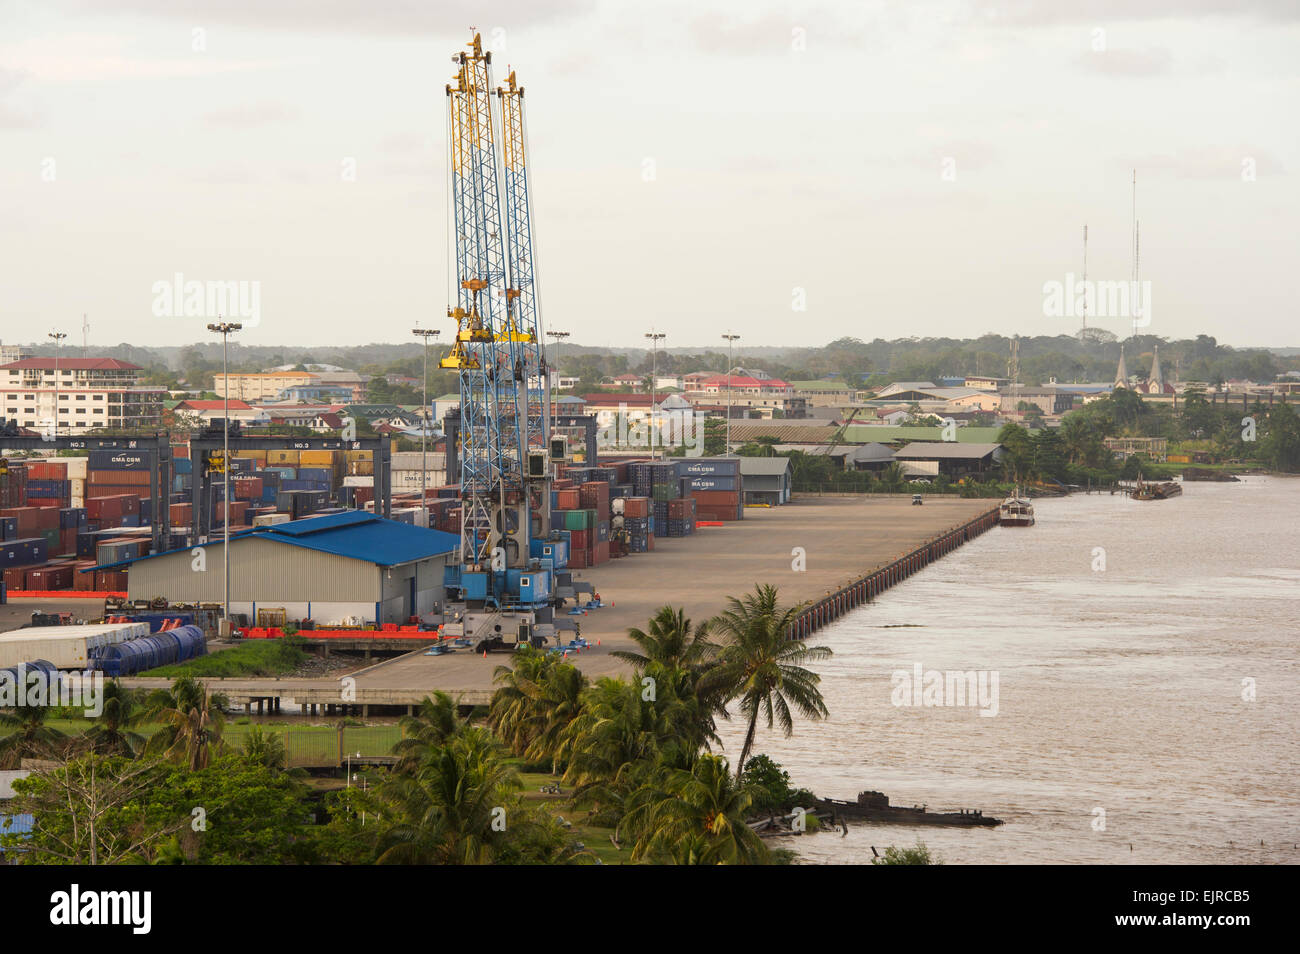 Harbour on the Suriname River, Paramaribo, Suriname Stock Photo - Alamy